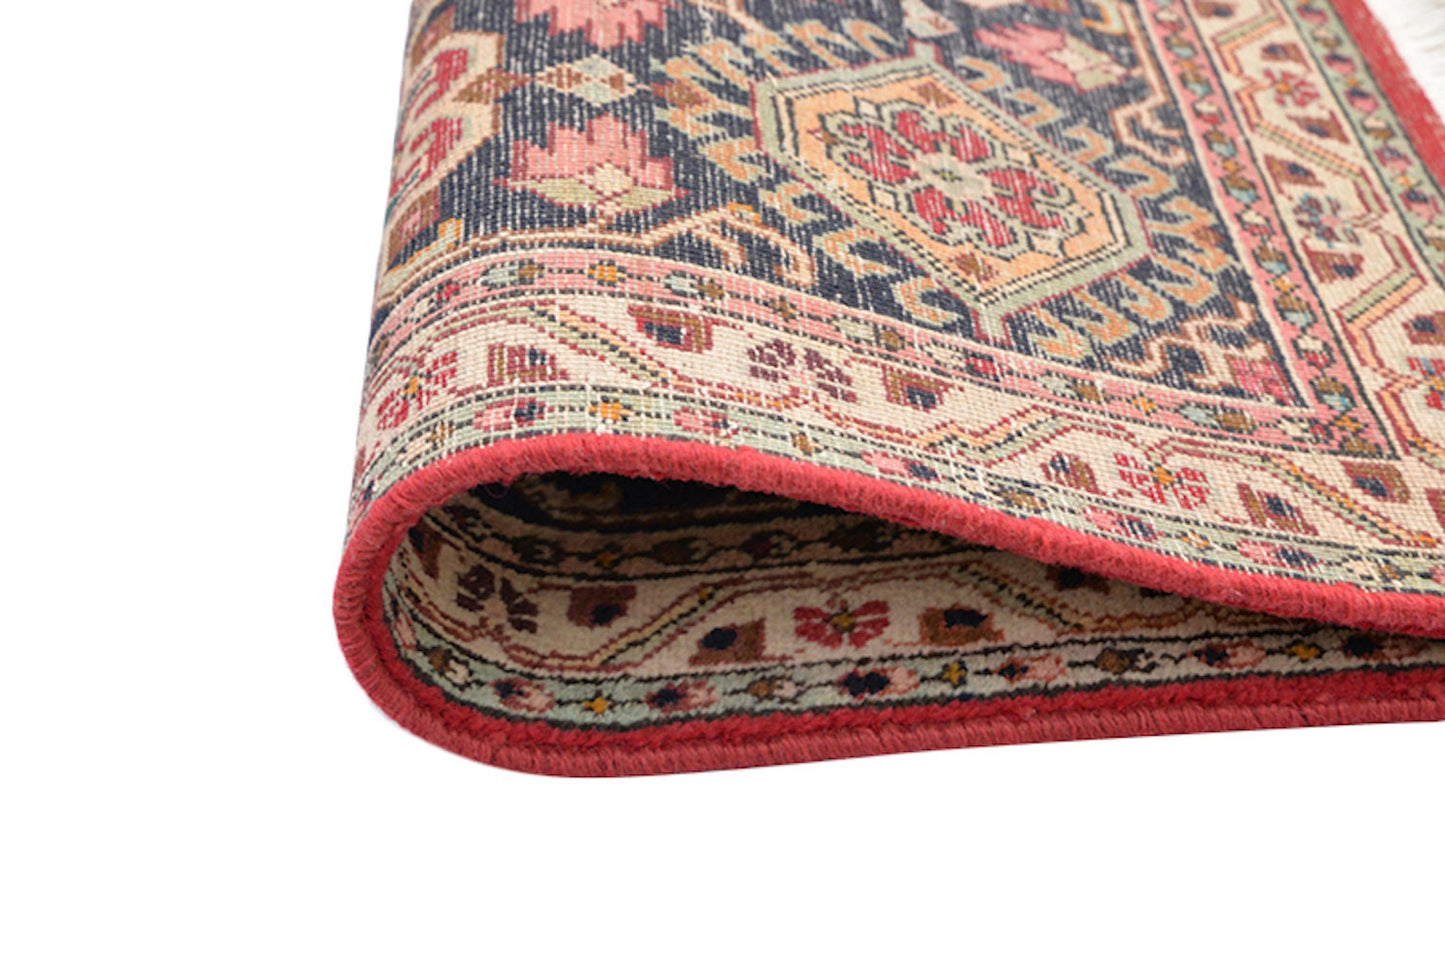 Oriental Antique Rug | Persian Pattern | Central Medallion | Red Beige Wool Rug | Living Room Large Rug